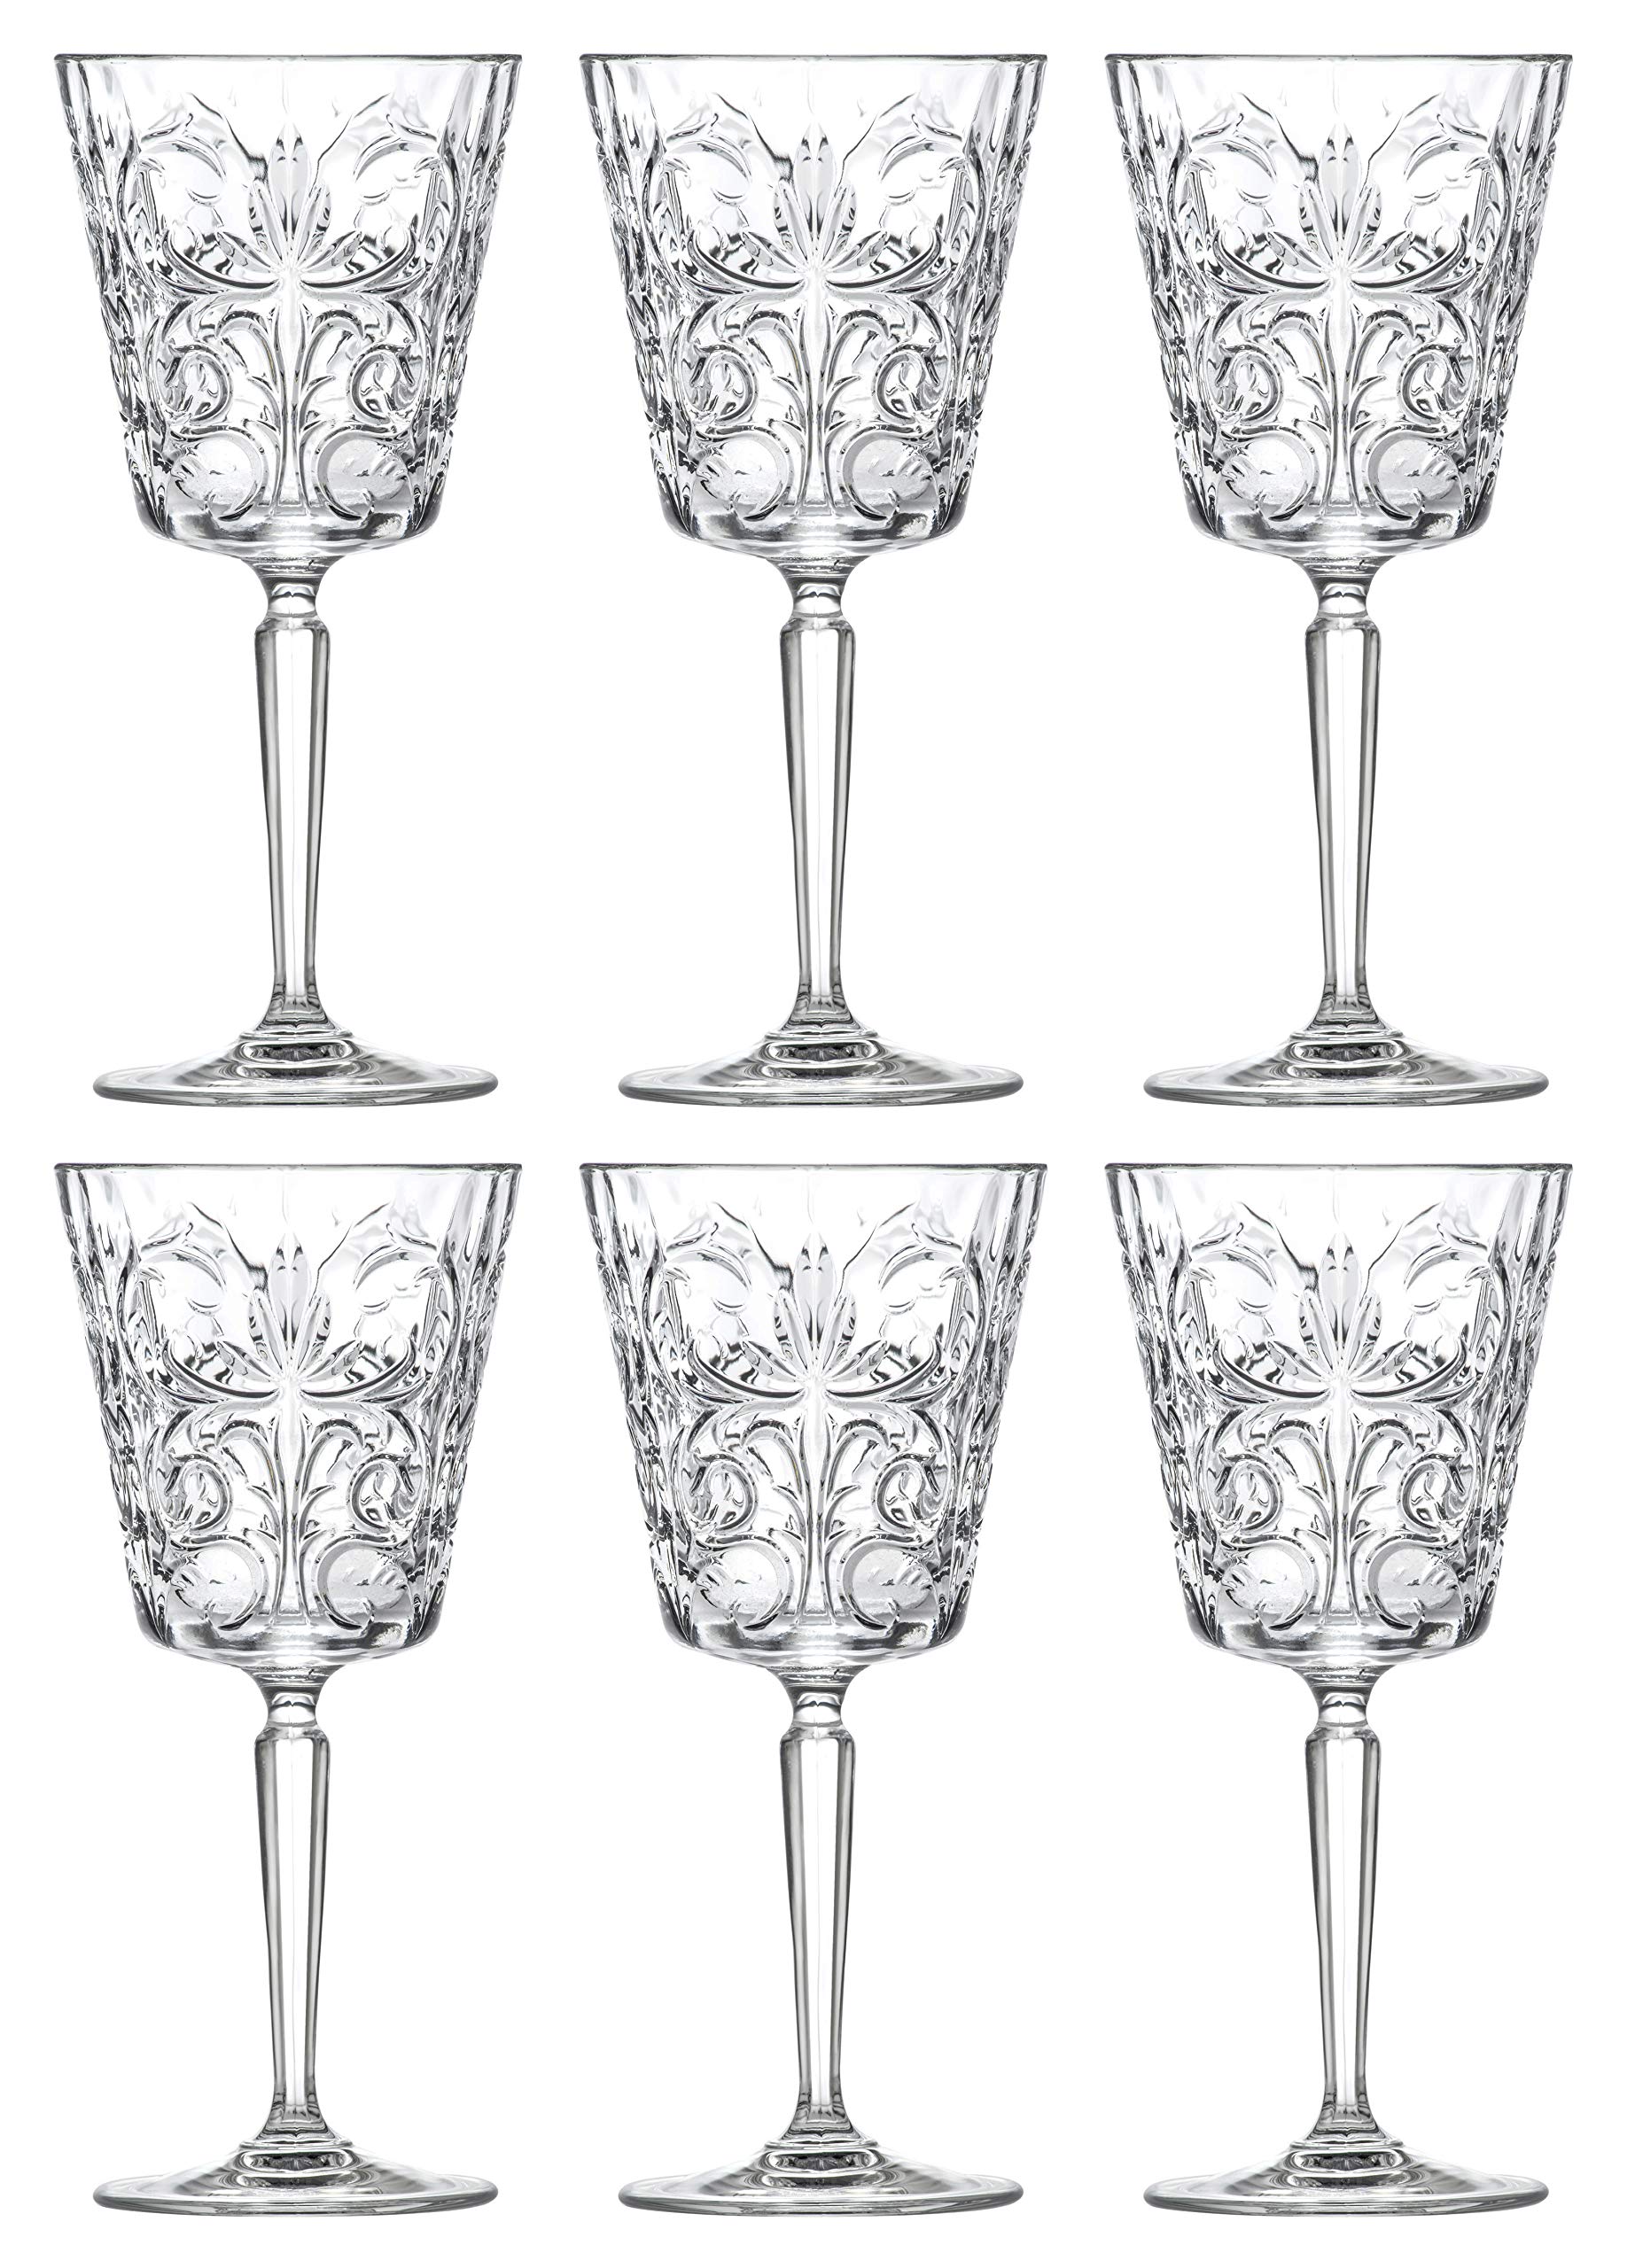 Barski Goblet - Red Wine Glass - Water Glass - Stemmed Glasses - Set of 6 Goblets - Glass Crystal - 11 oz. - Tattoo Designed -Beautifully Designed Made in Europe